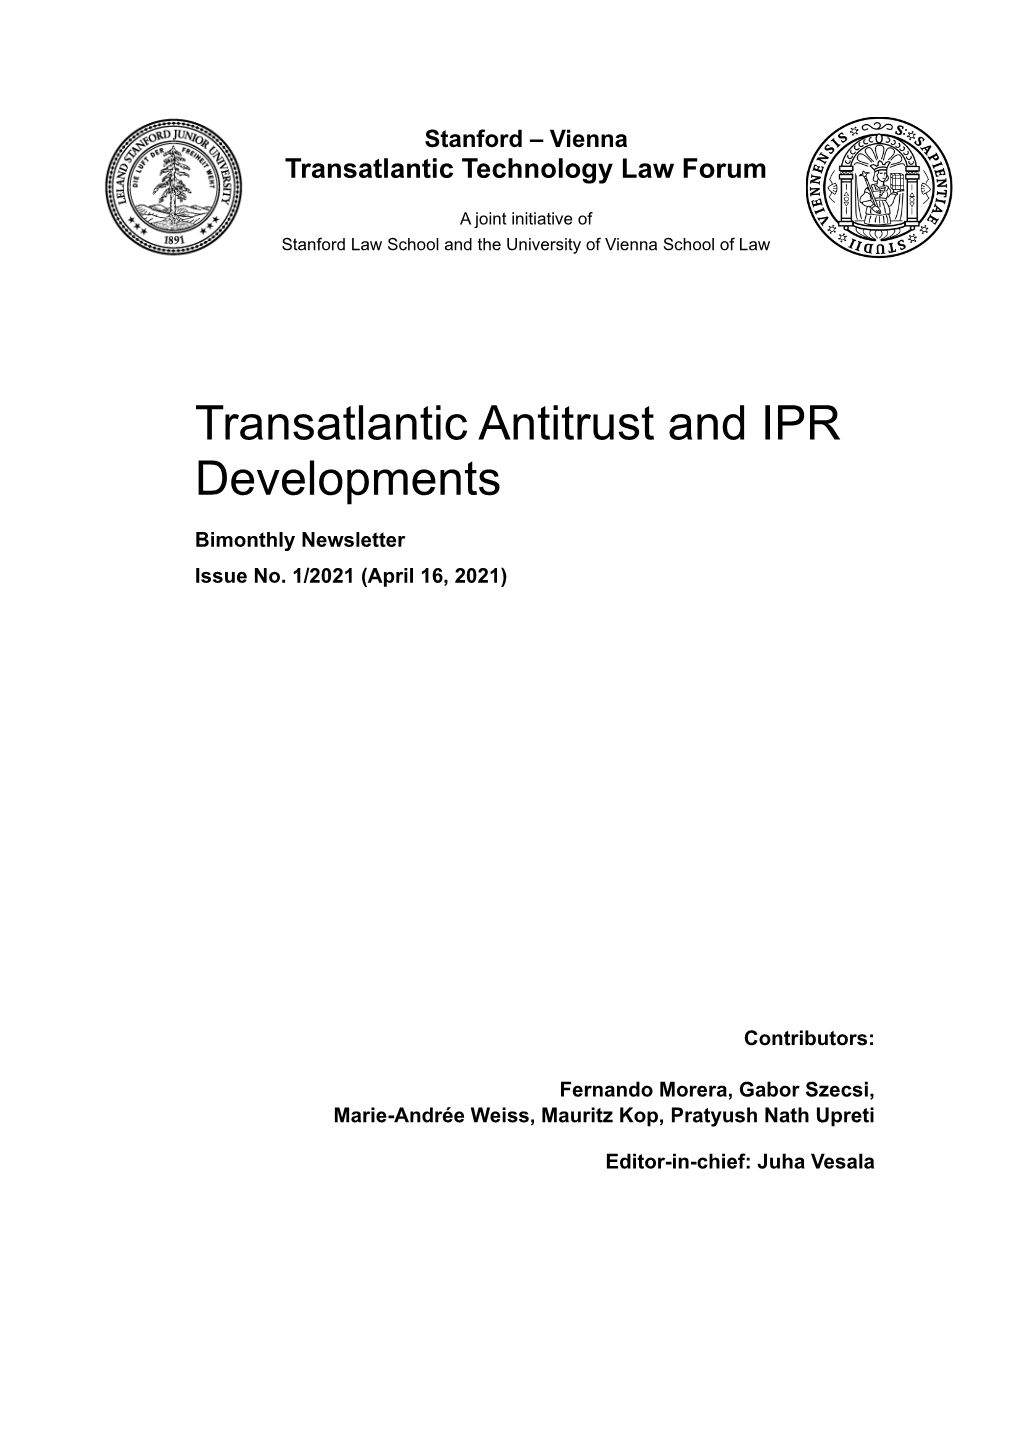 Transatlantic Antitrust and IPR Developments, Issue 1/2021 Stanford-Vienna Transatlantic Technology Law Forum 4